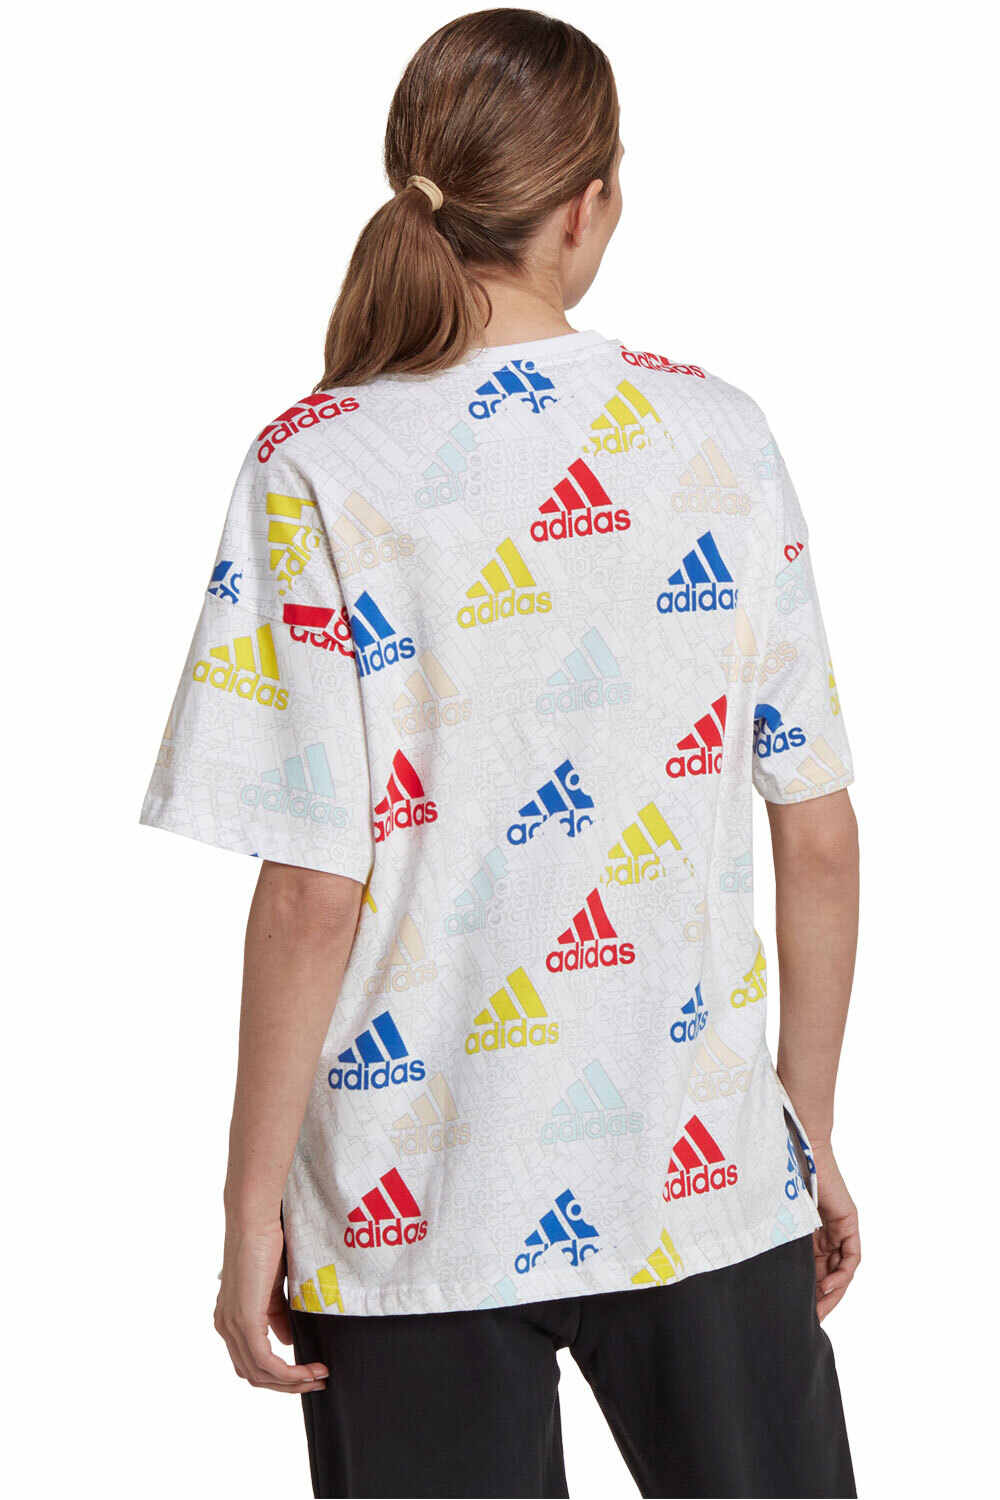 adidas camiseta manga corta mujer Essentials Multi-Colored Logo Boyfriend vista trasera